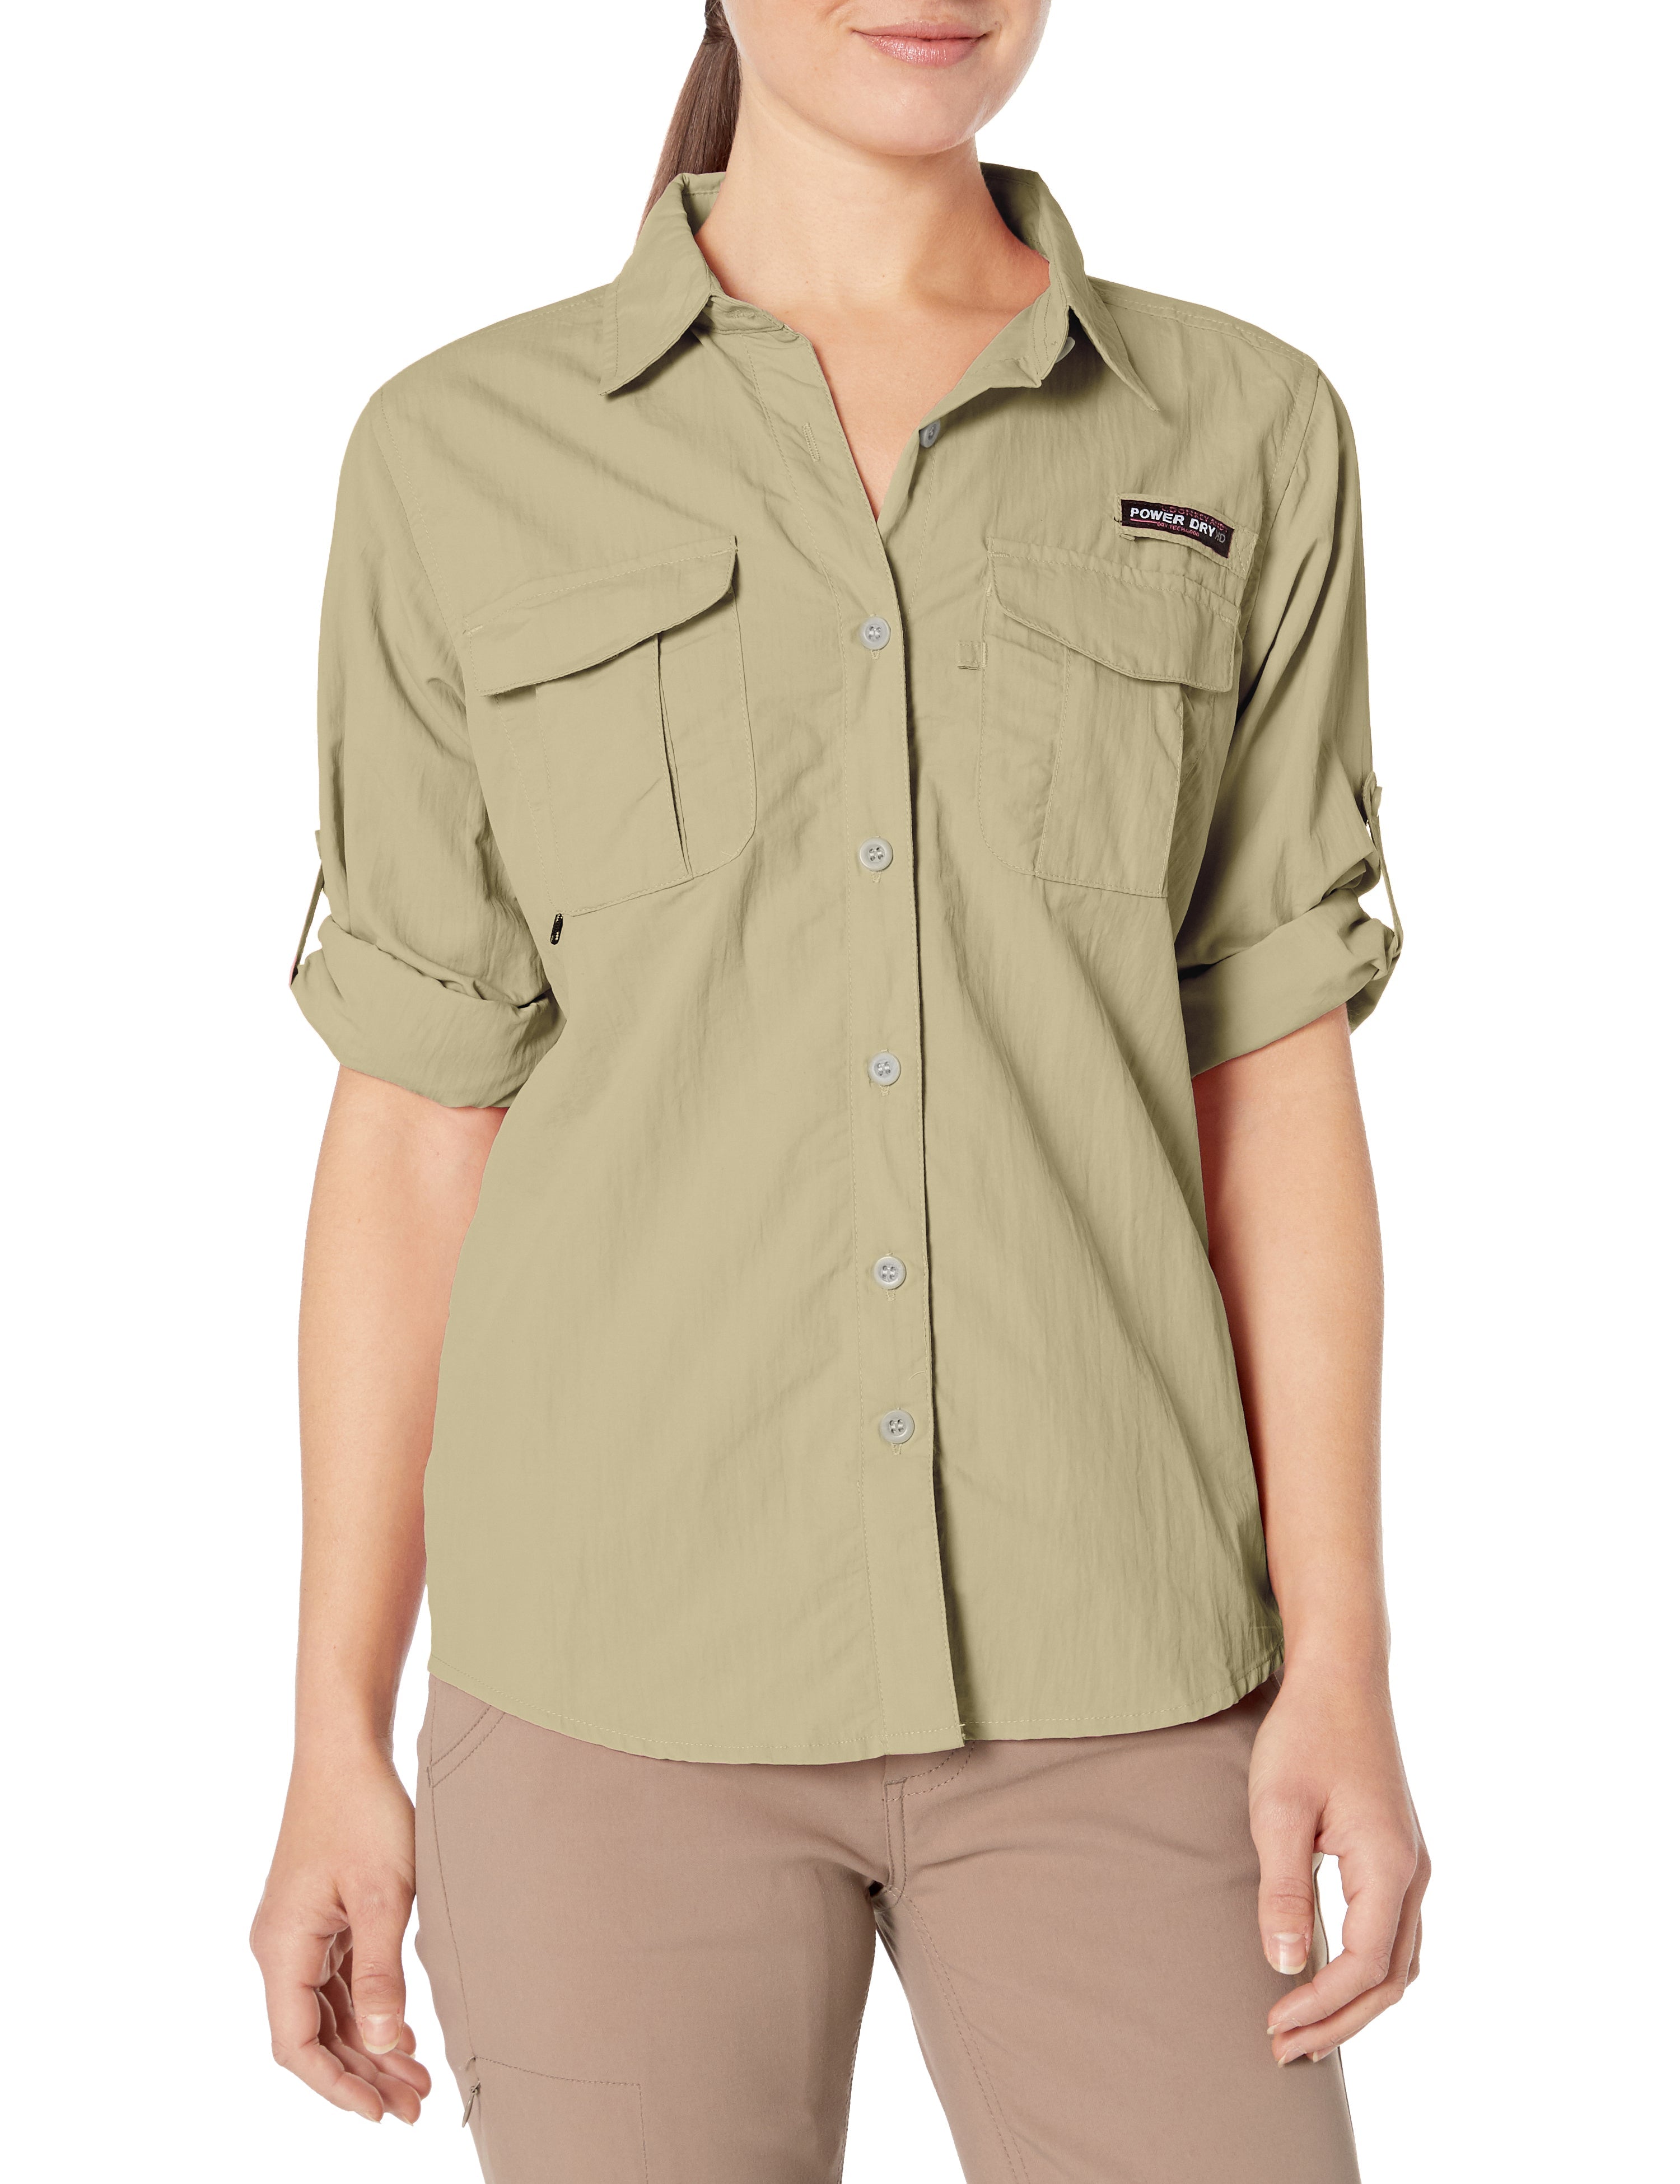 Women's UPF 50+ UV Protection Long Sleeve Fishing Shirt – Little Donkey Andy